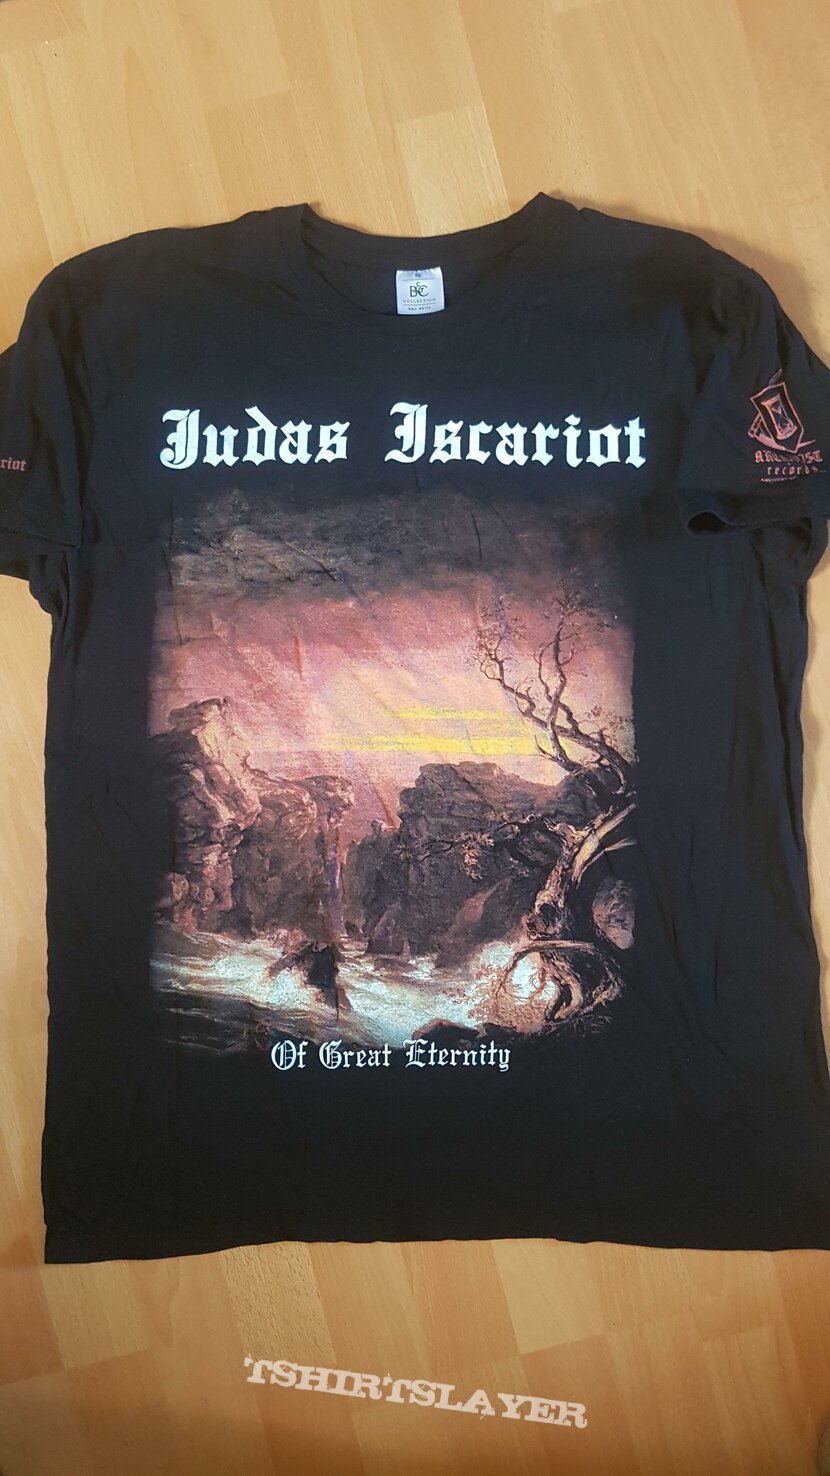 Judas Iscariot – Of Great Eternity